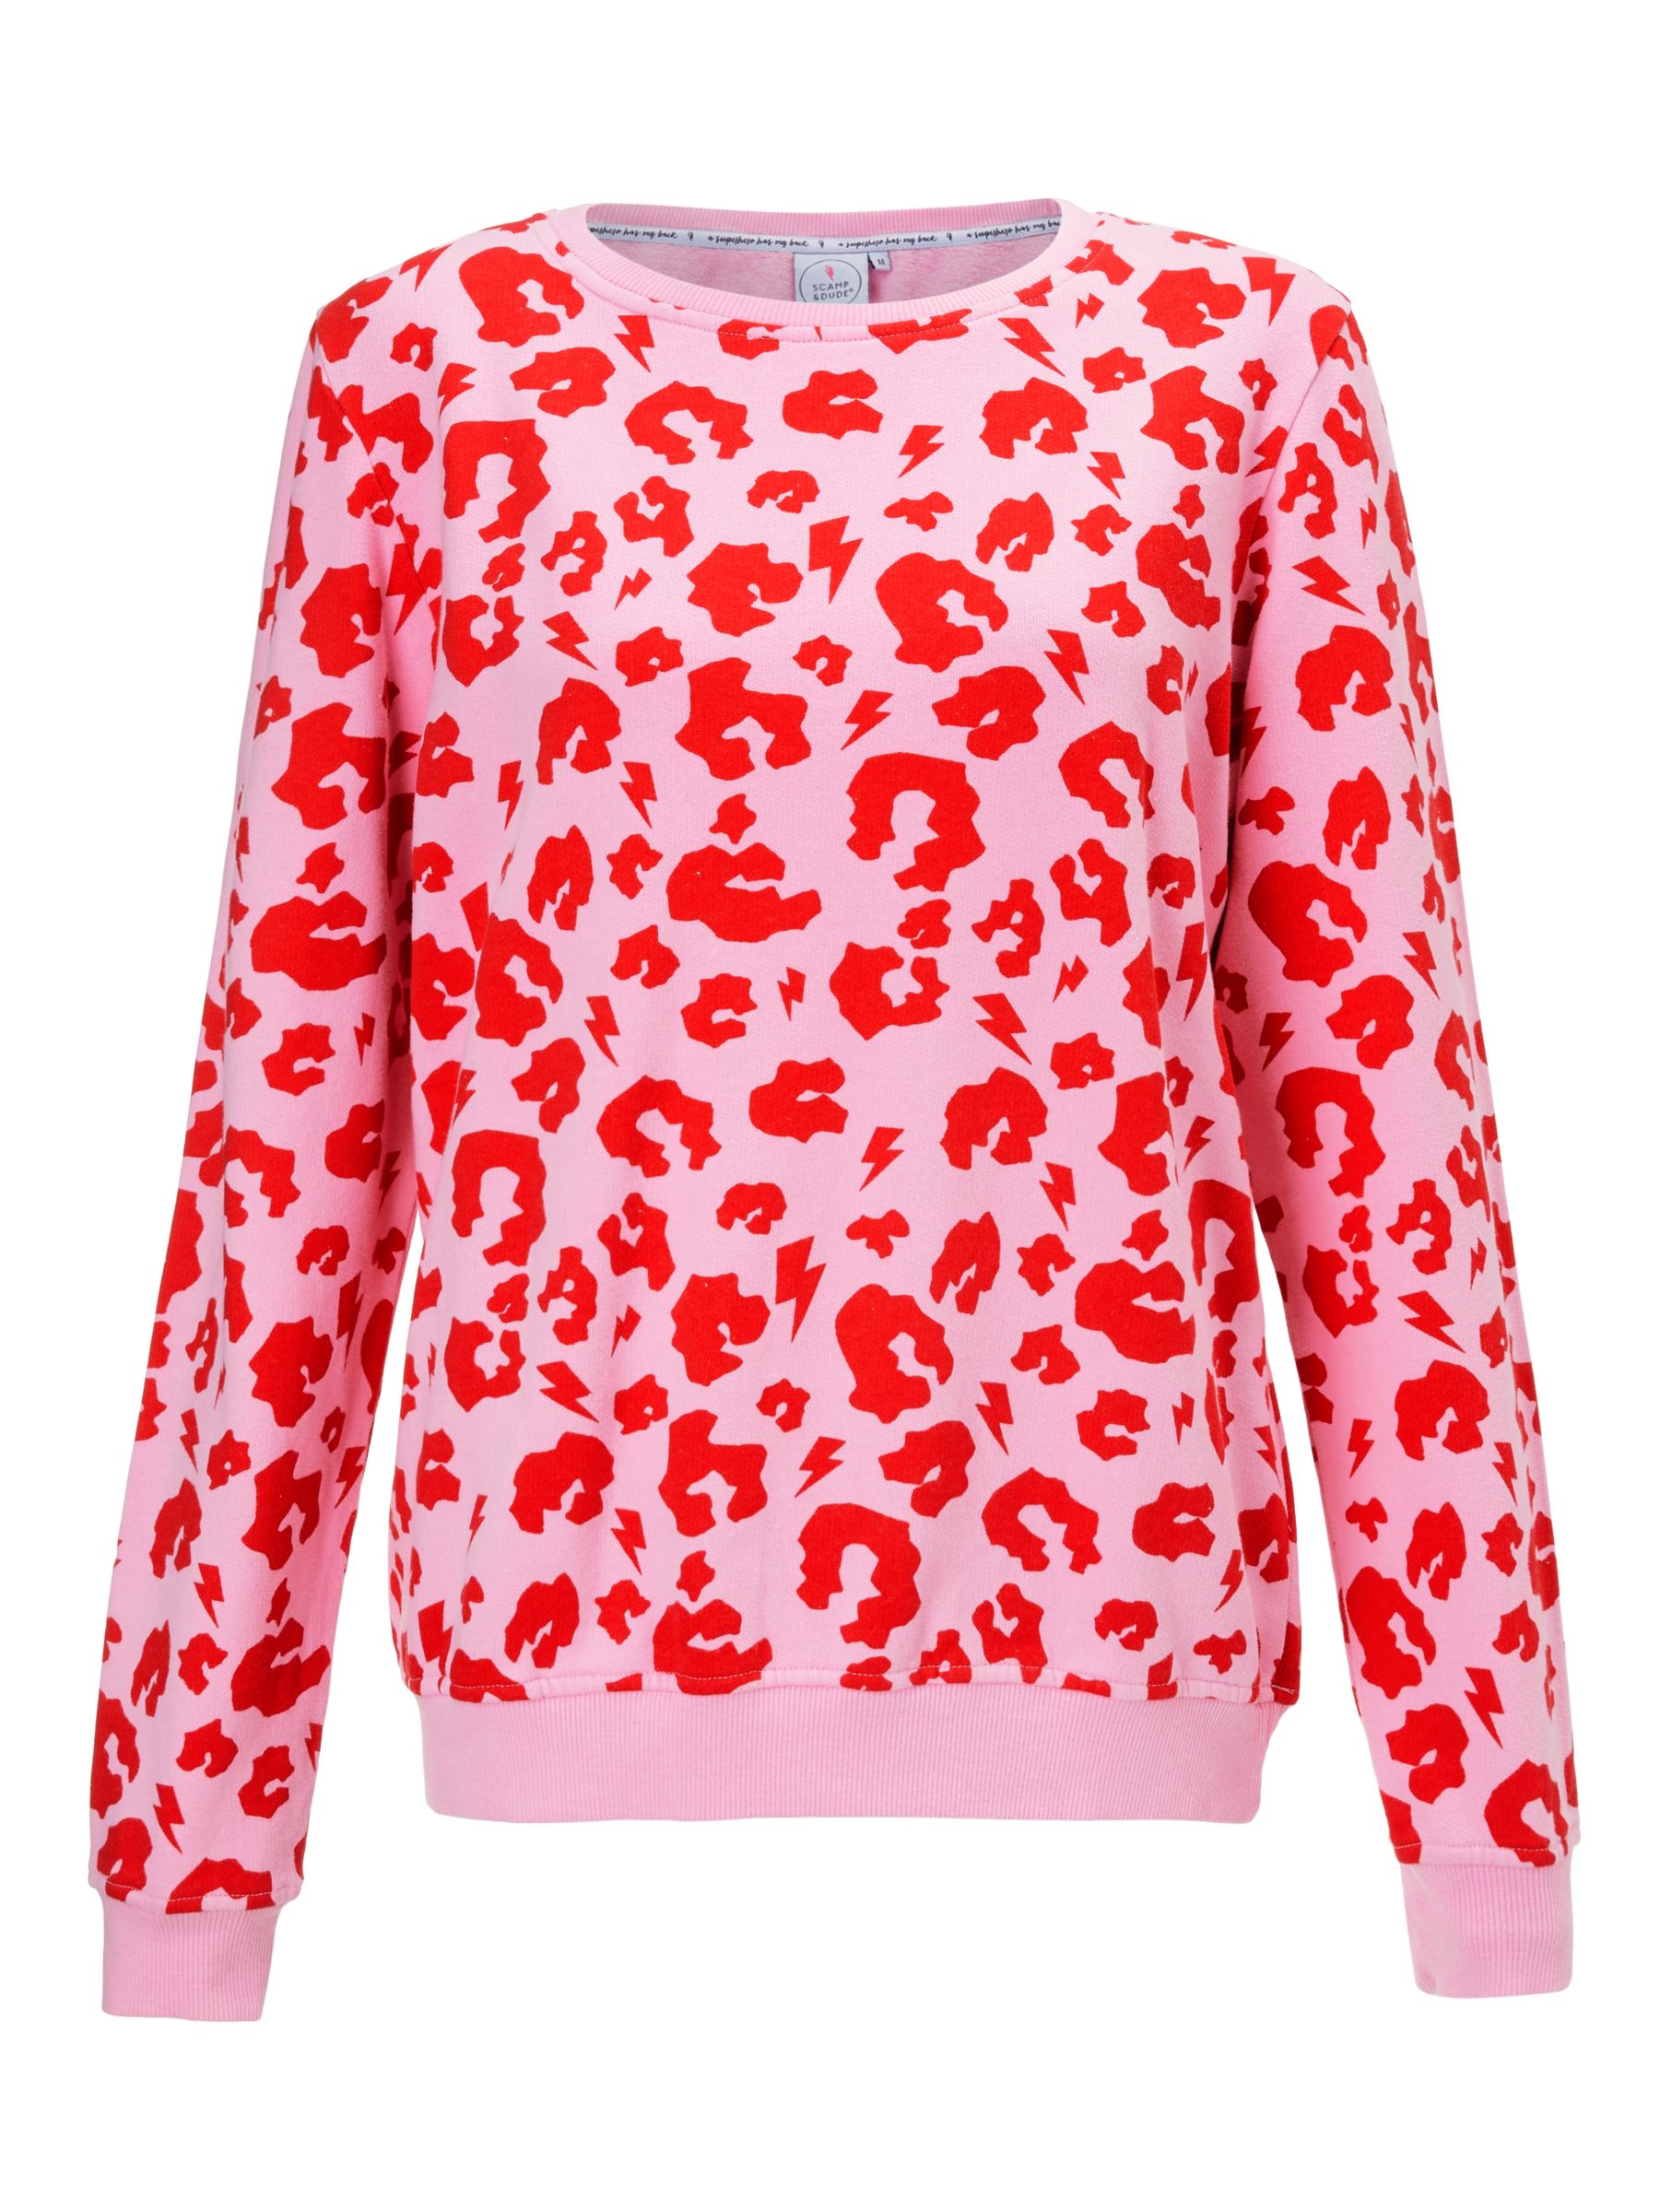 Scamp & Dude Unisex Crew Neck Leopard Print Sweatshirt, Pink/Red, XS